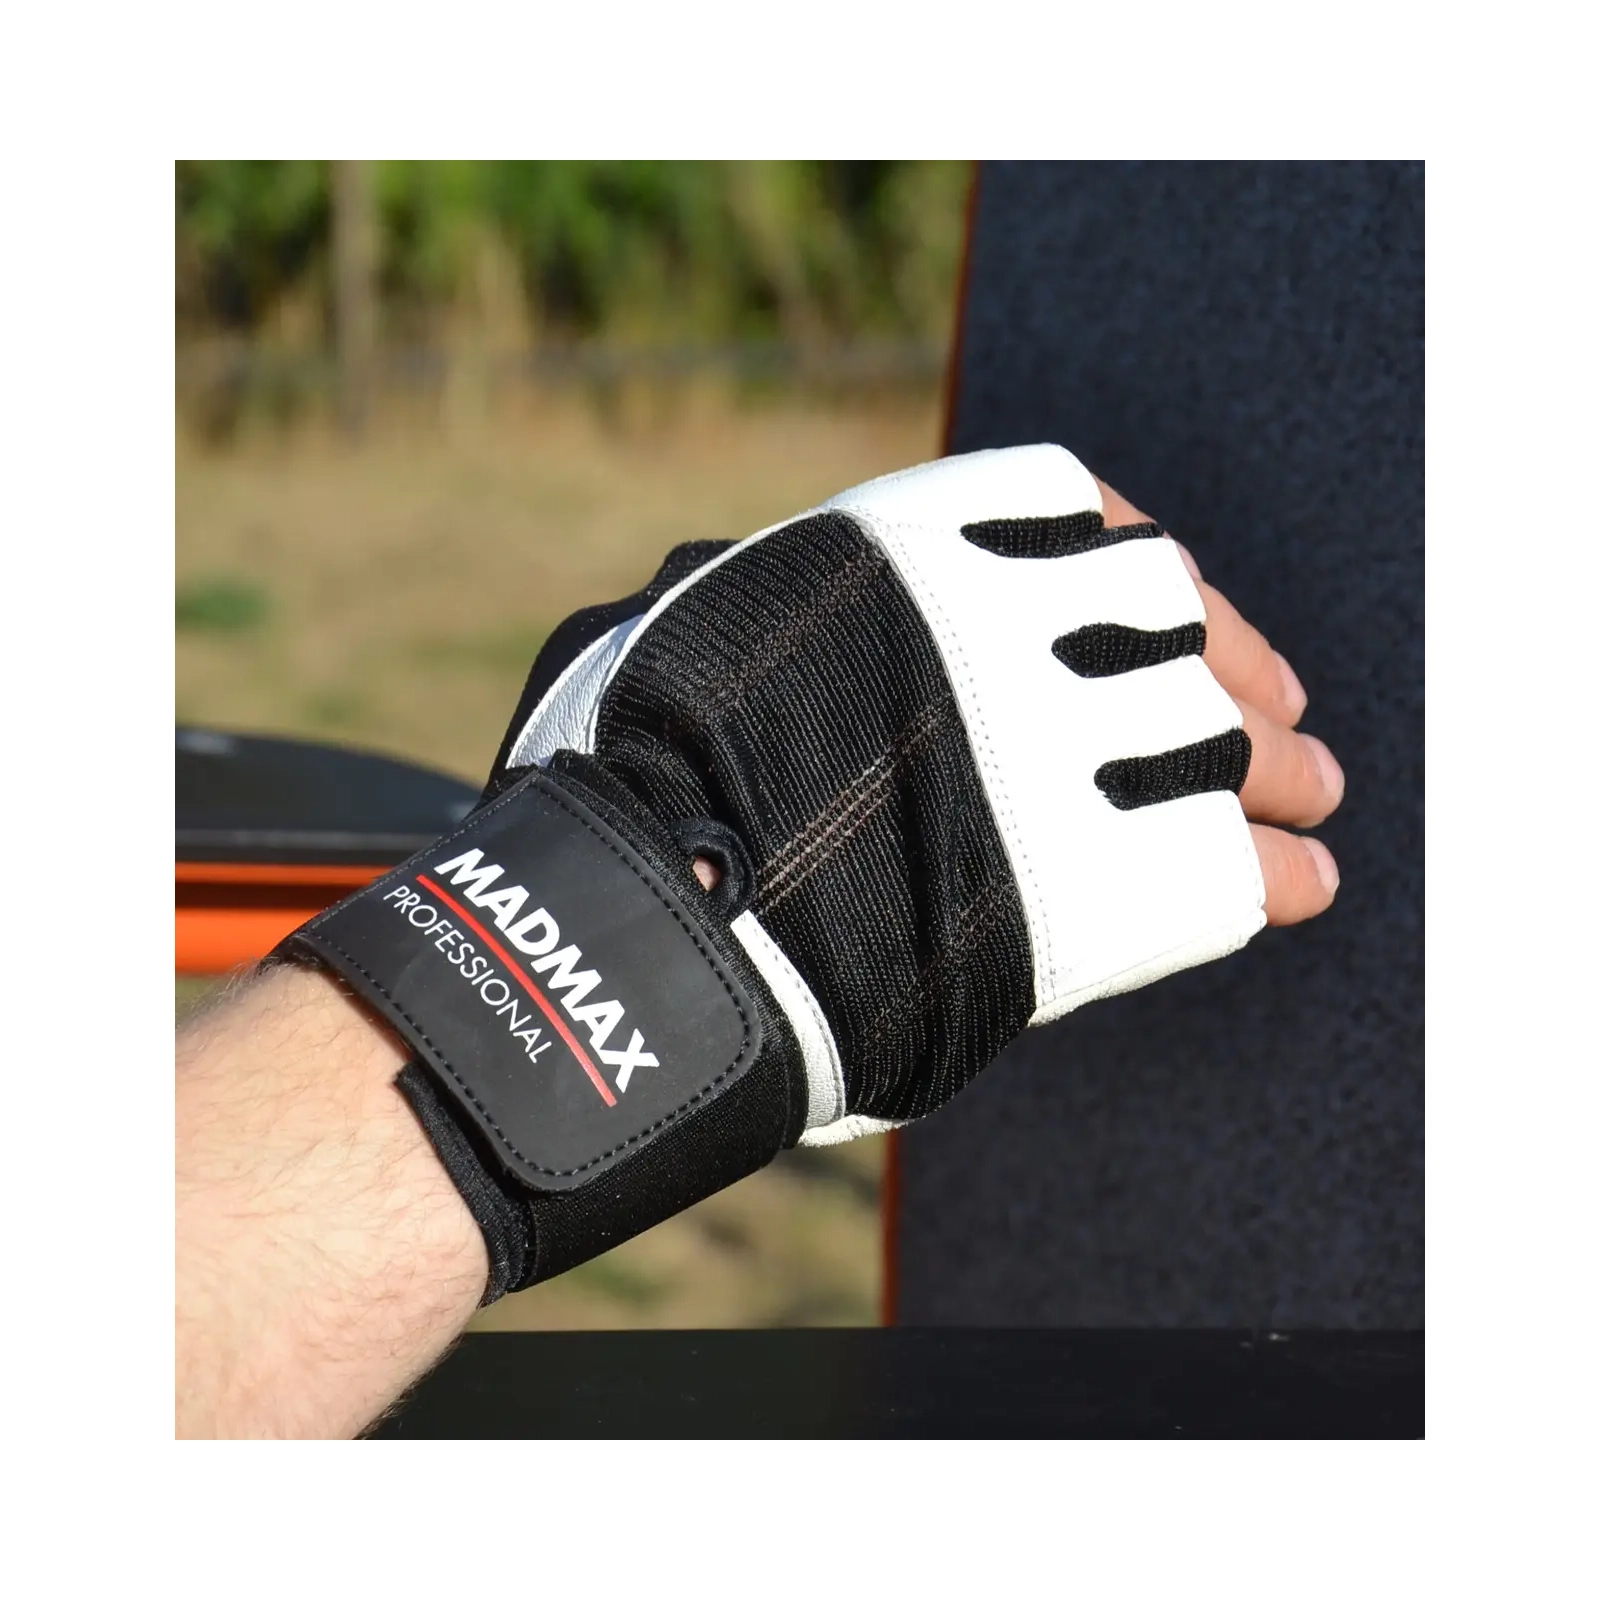 Перчатки для фитнеса MadMax MFG-269 Professional White XXL (MFG-269-White_XXL) изображение 2